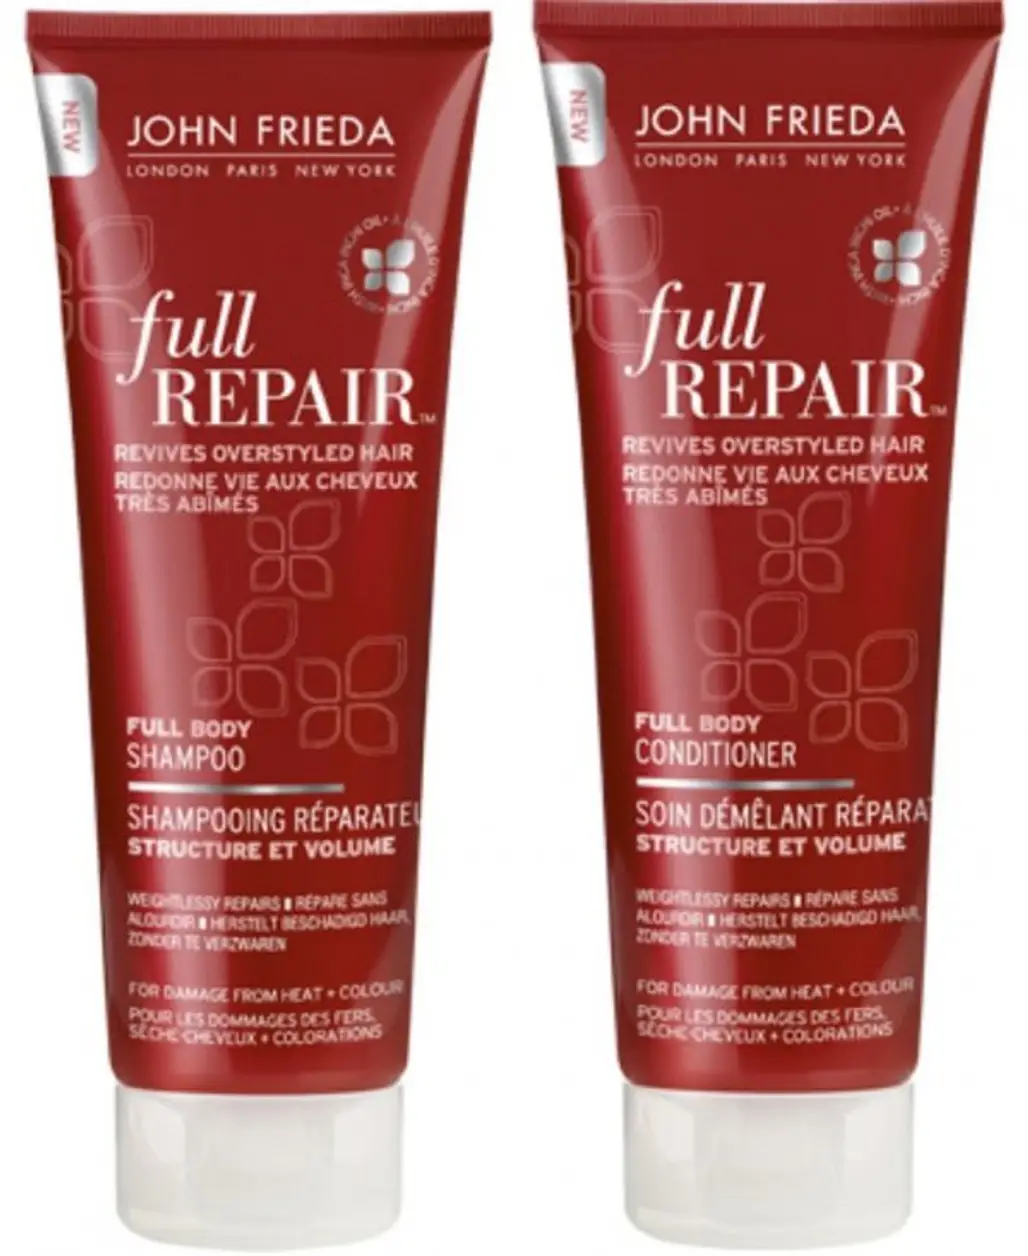 John Freida Full Repair Full Body Shampoo and Conditioner